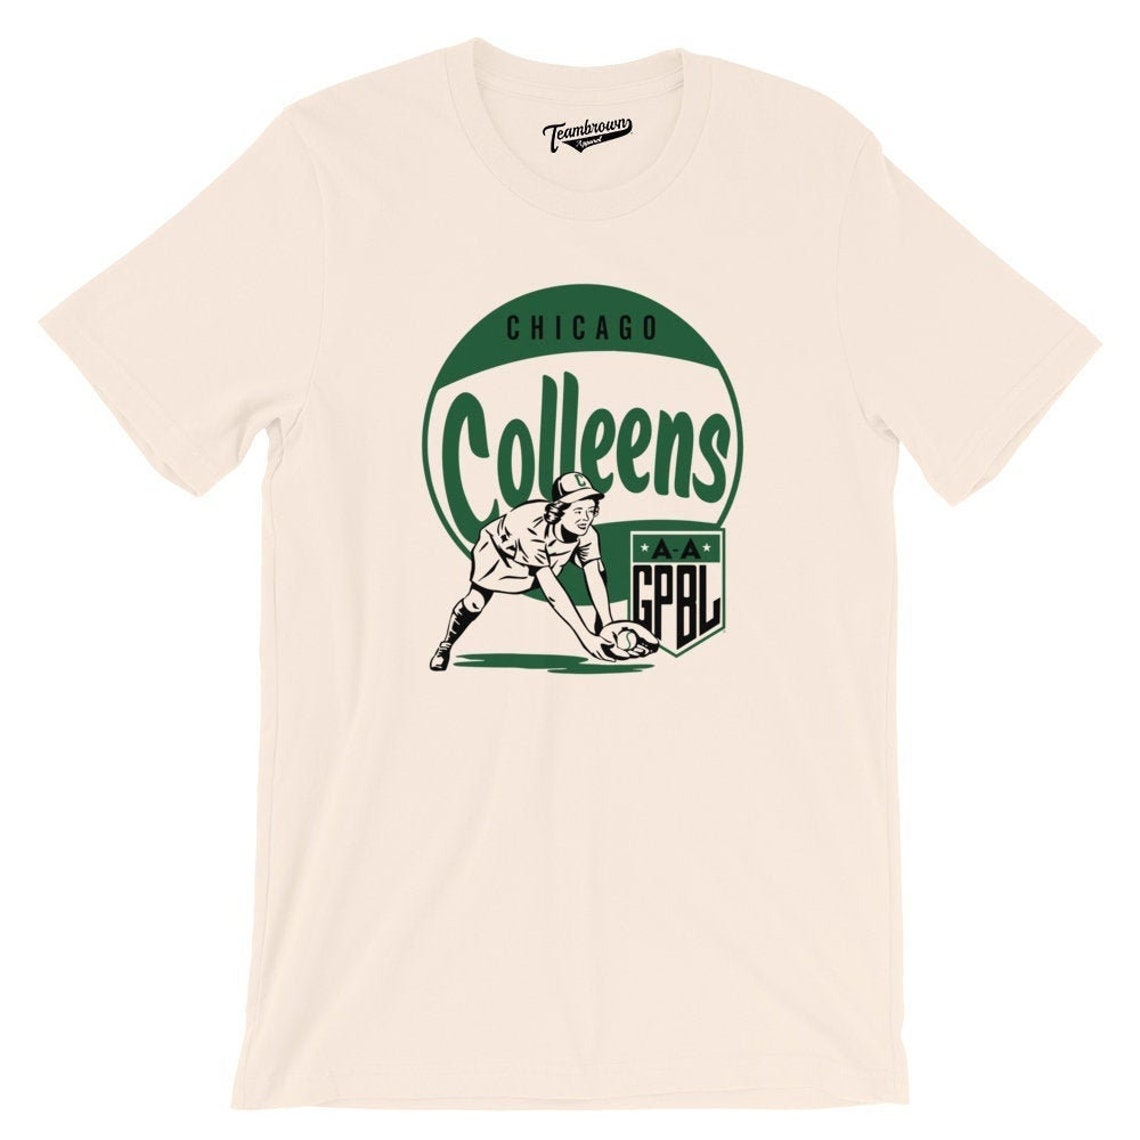 AAGPBL Licensed Chicago Colleens T-shirt Softball Baseball - Etsy